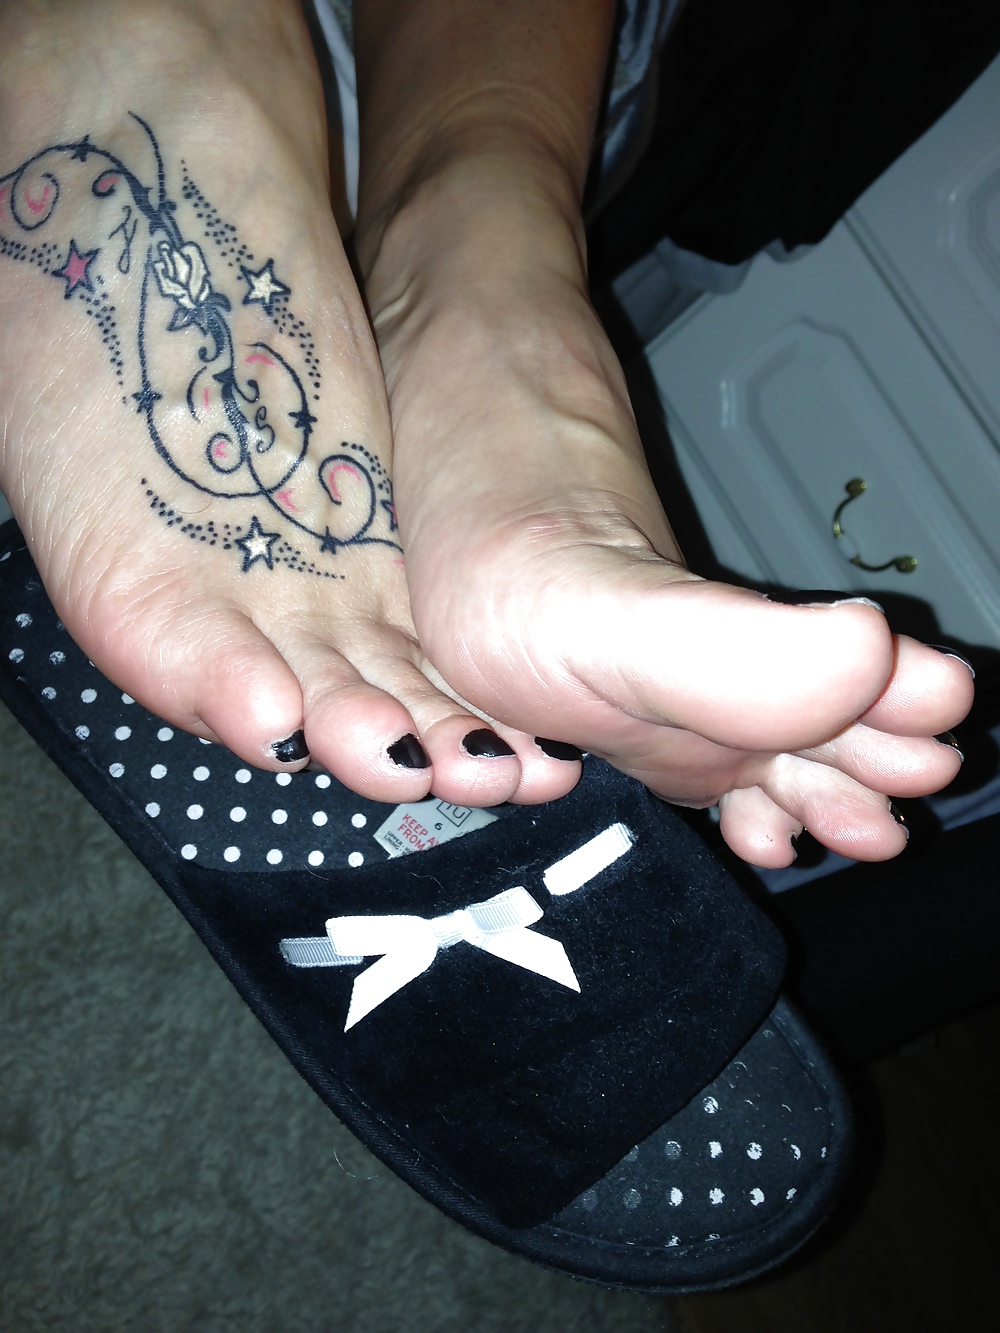 Sexy slipper feet pics for jaynes foot fans #14768907